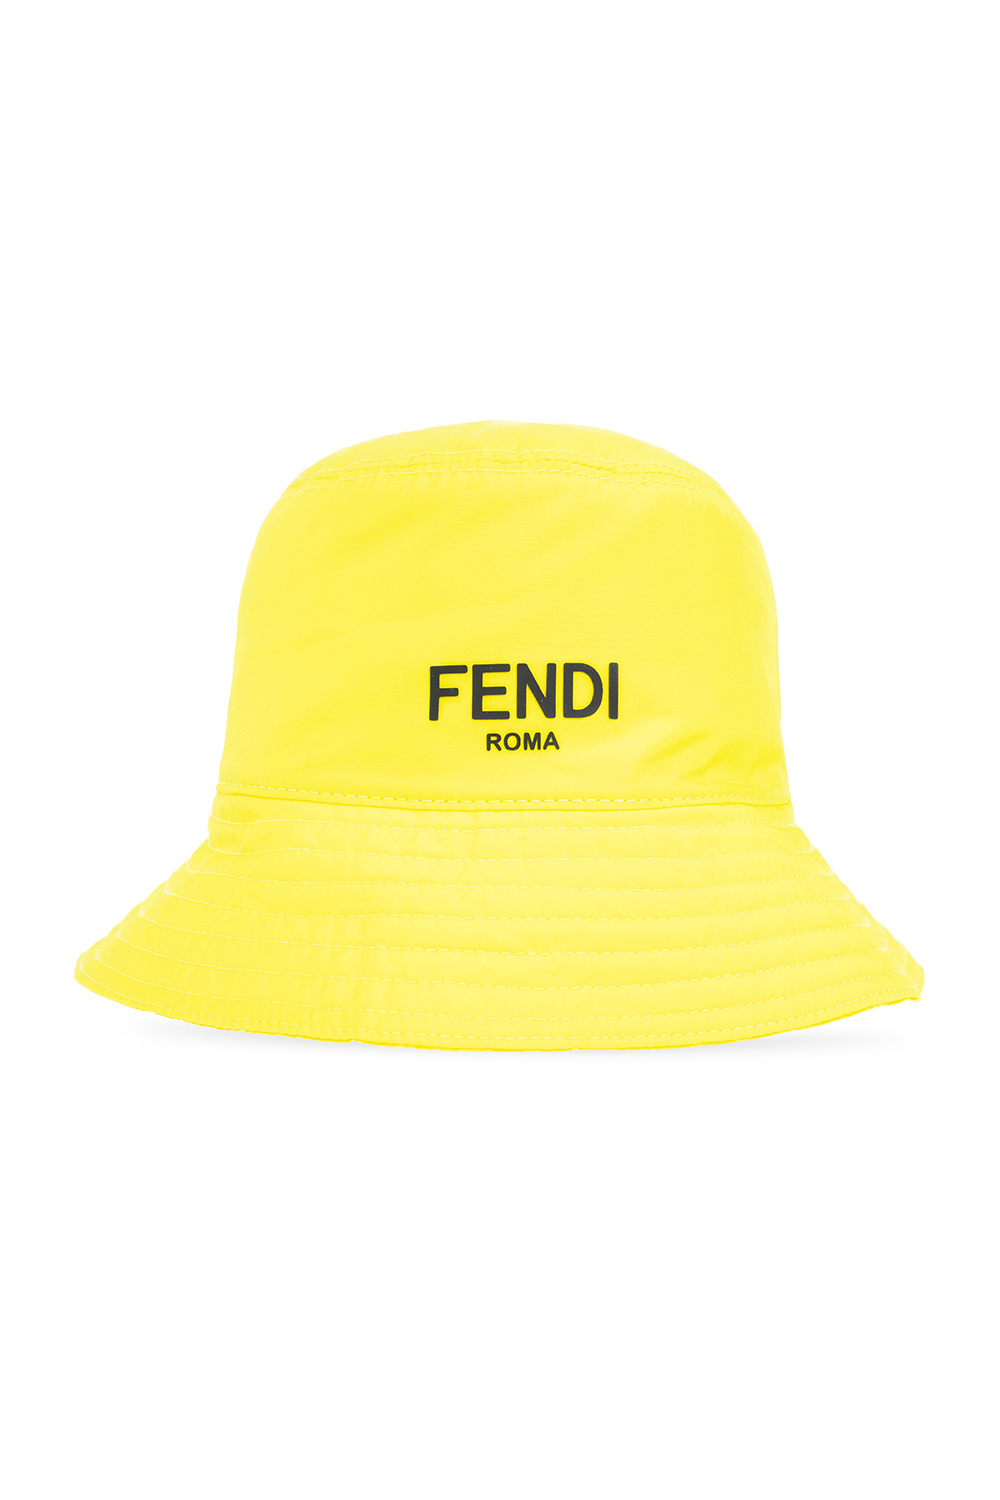 Fendi Kids robes usb caps Knitwear